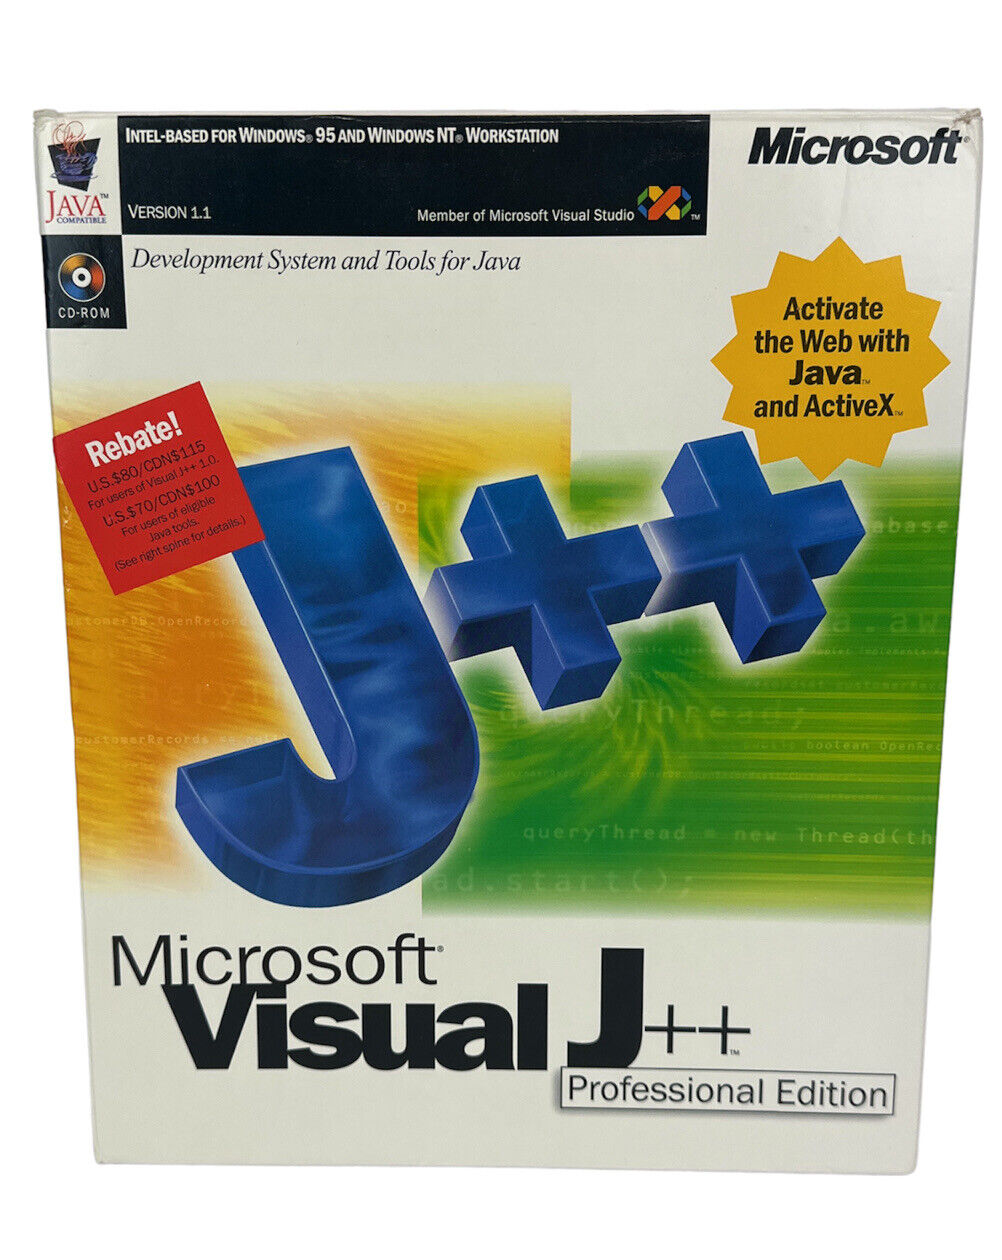 NEW Microsoft Visual J++ Professional Edition Windows NT Workstation